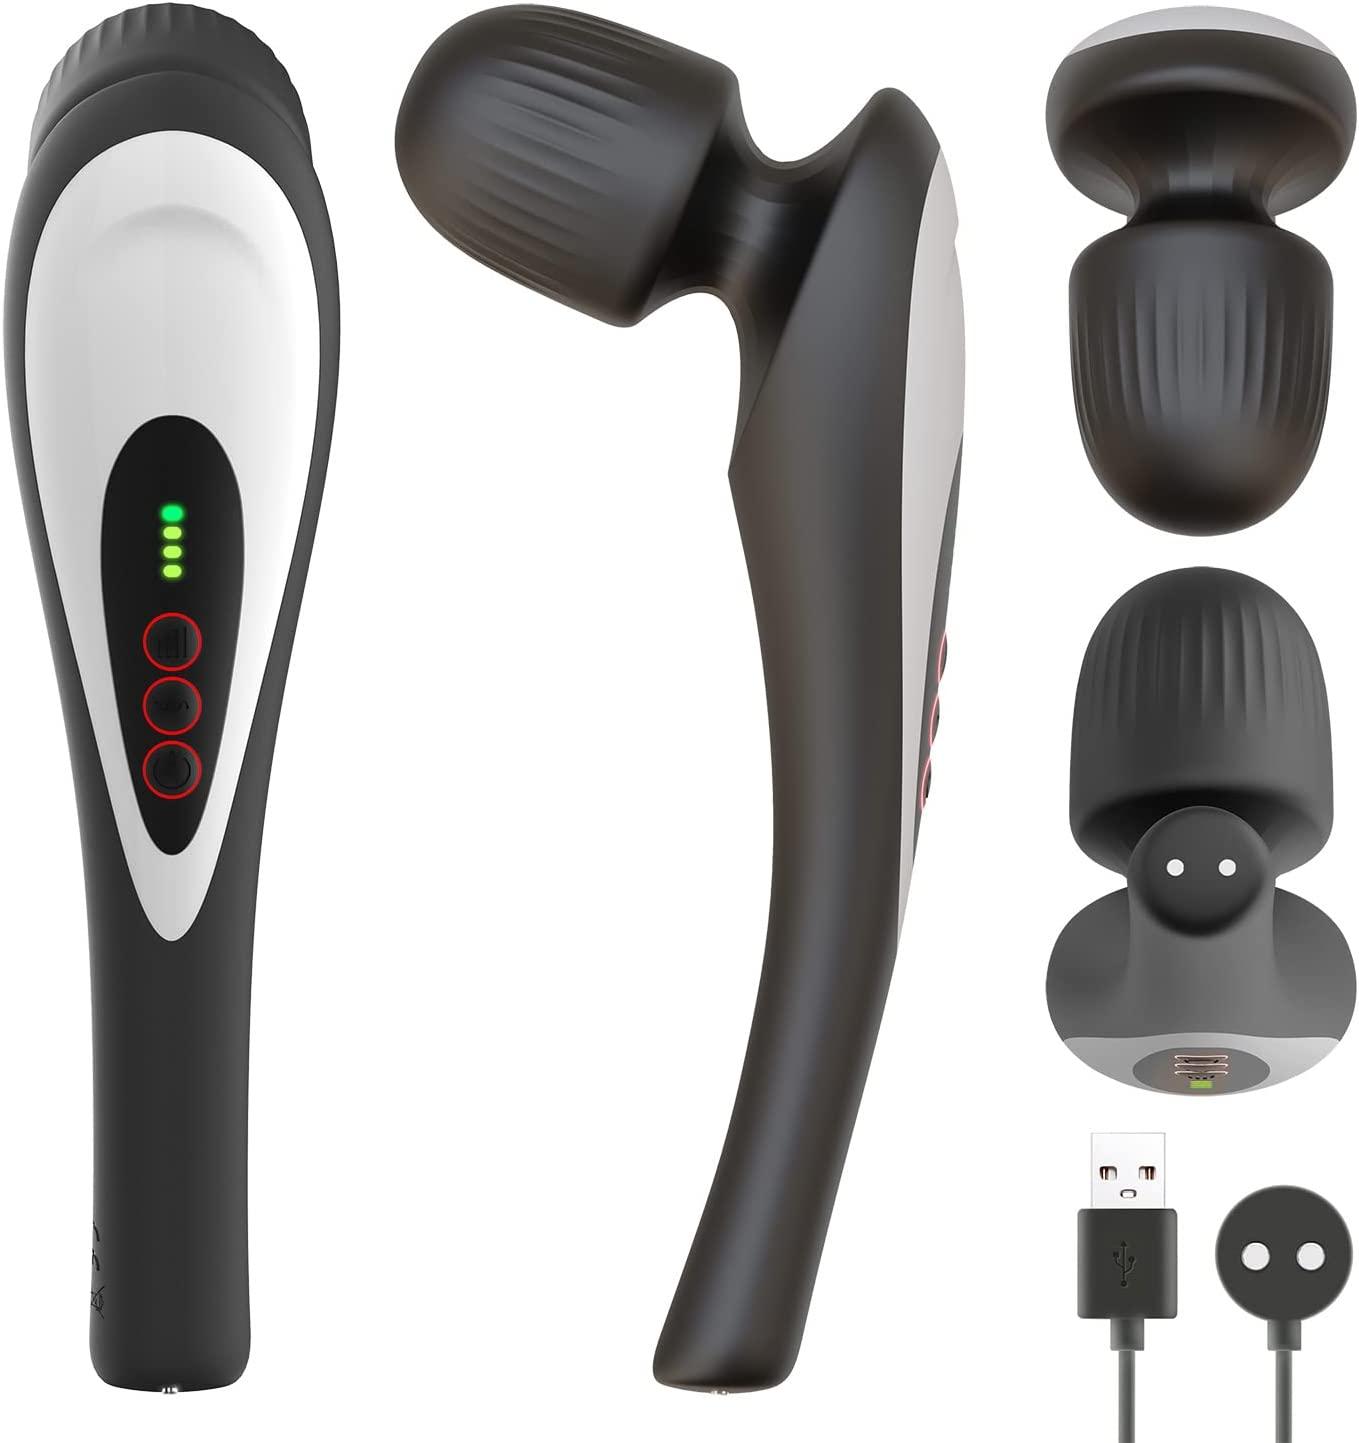 Roysmart Personal Handheld Vibrating Massager-Cordless Electric